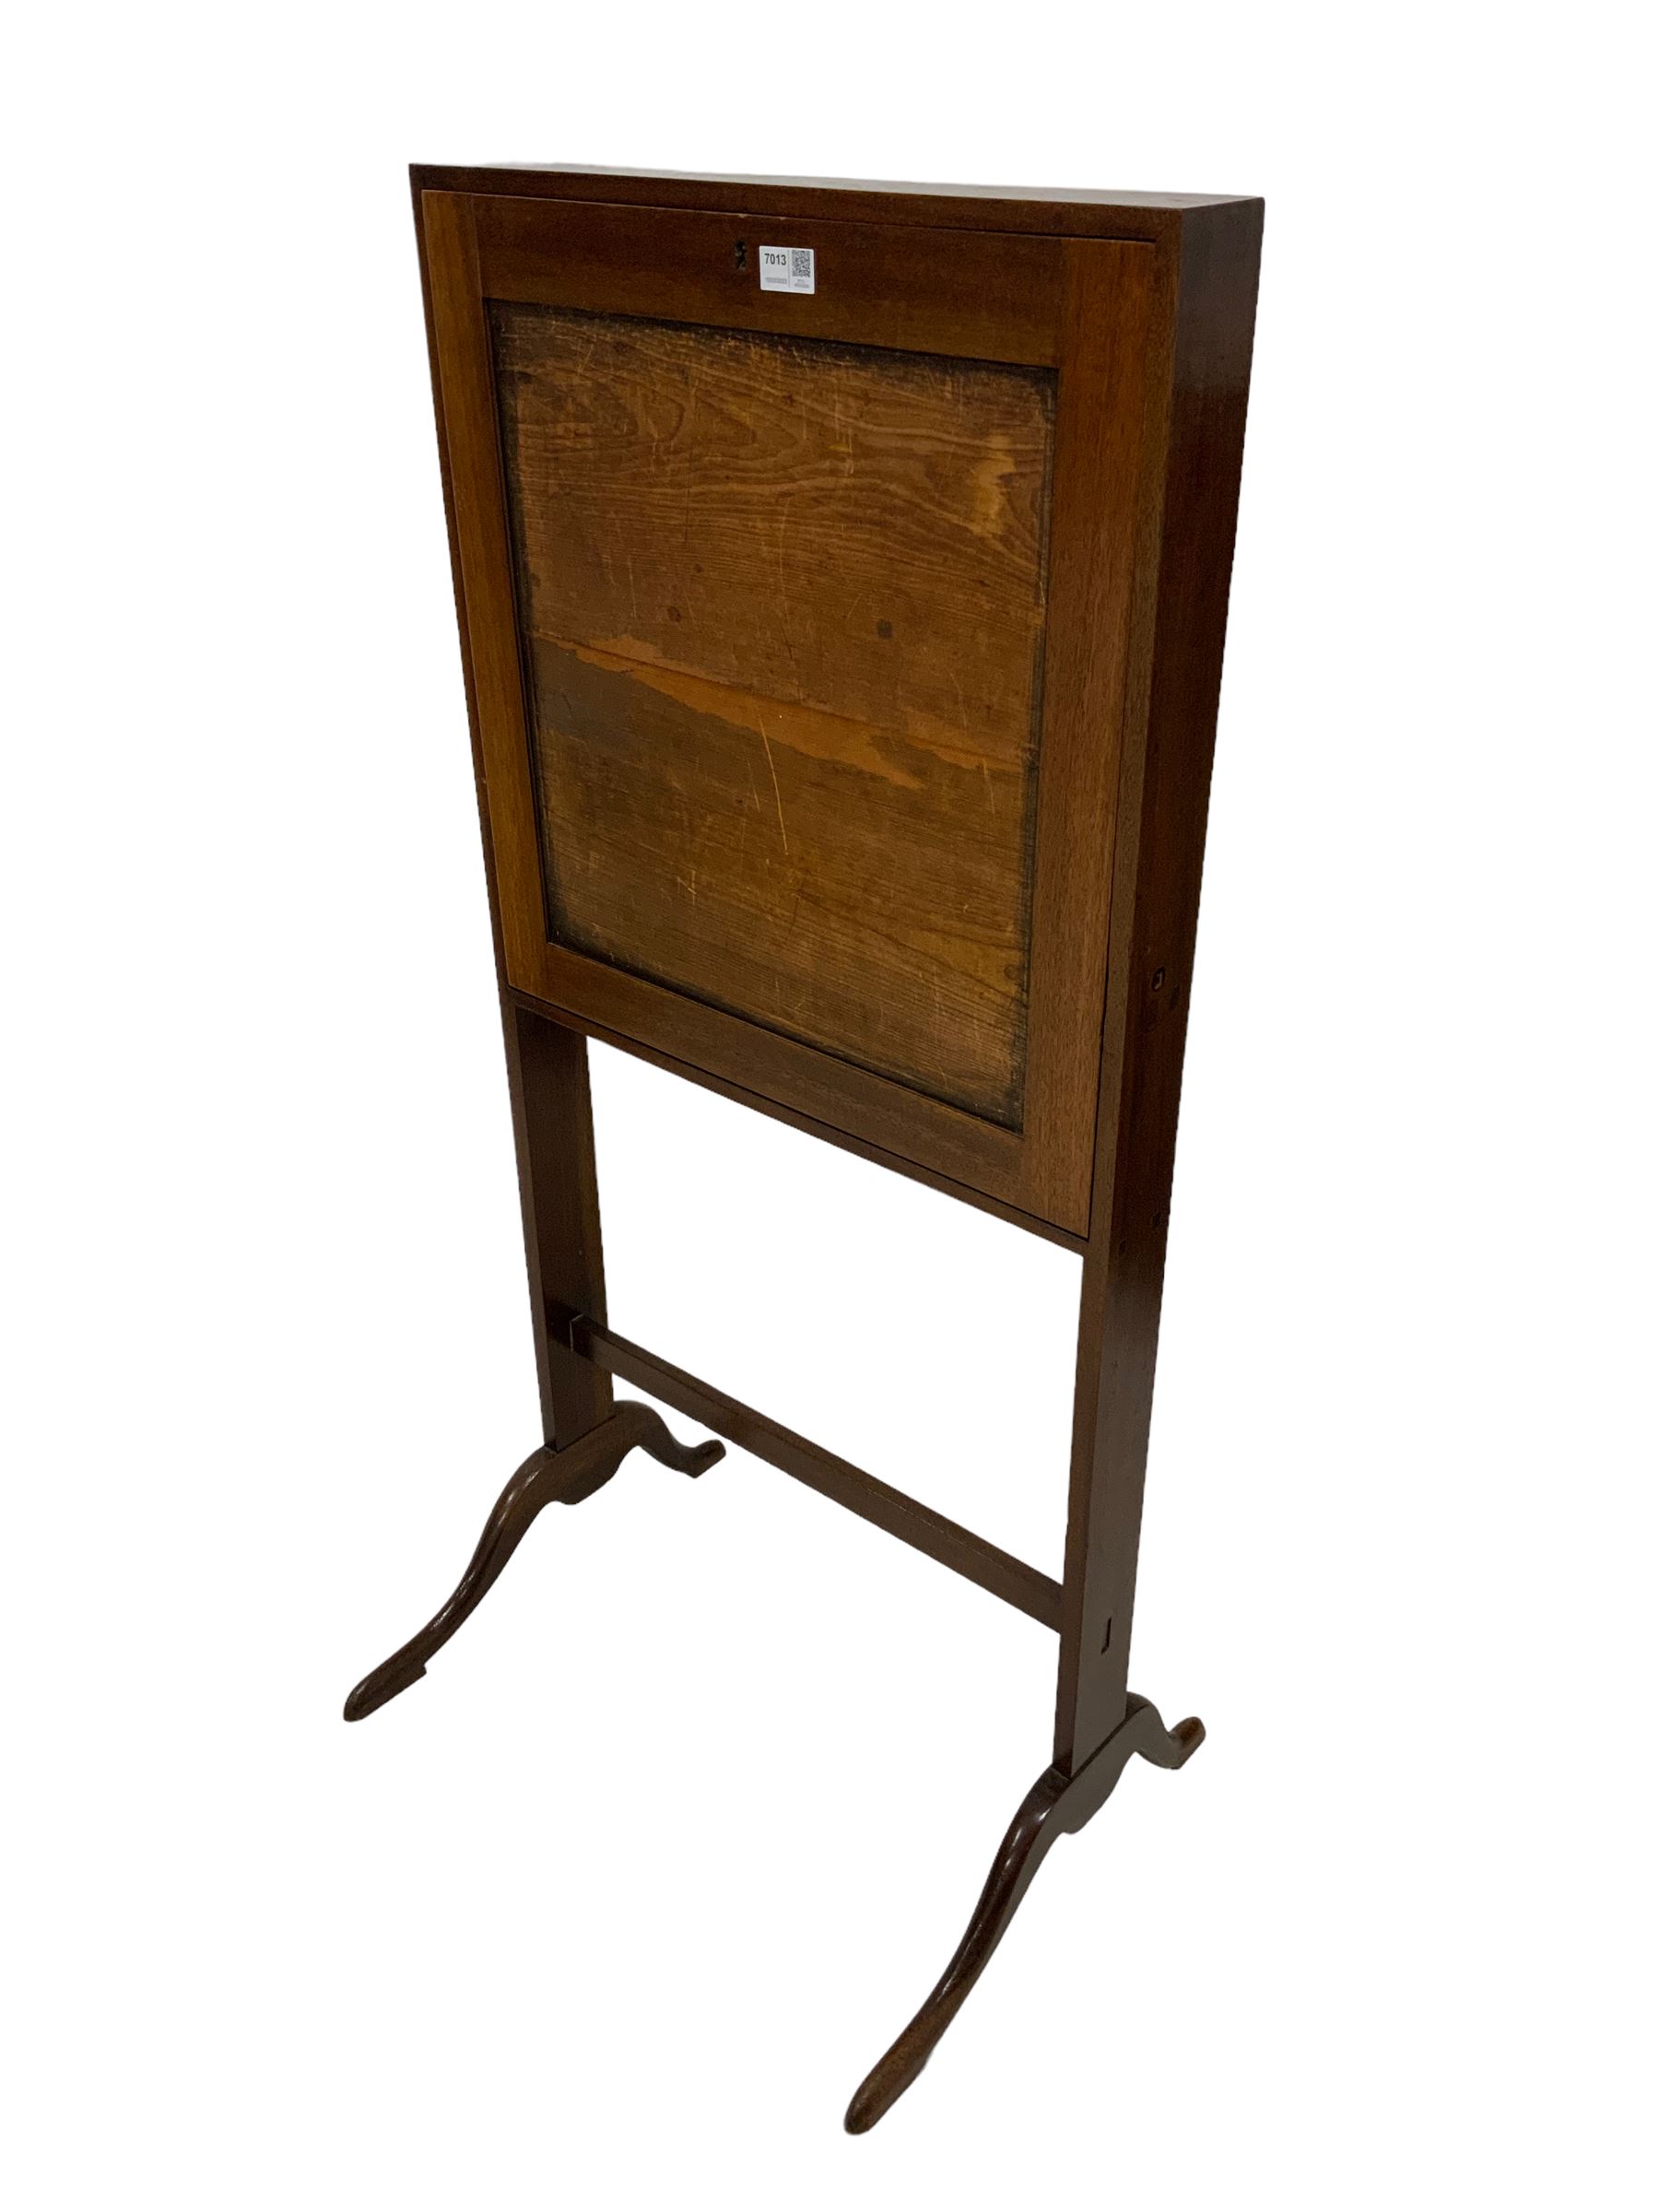 19th century mahogany travel desk - Image 2 of 7